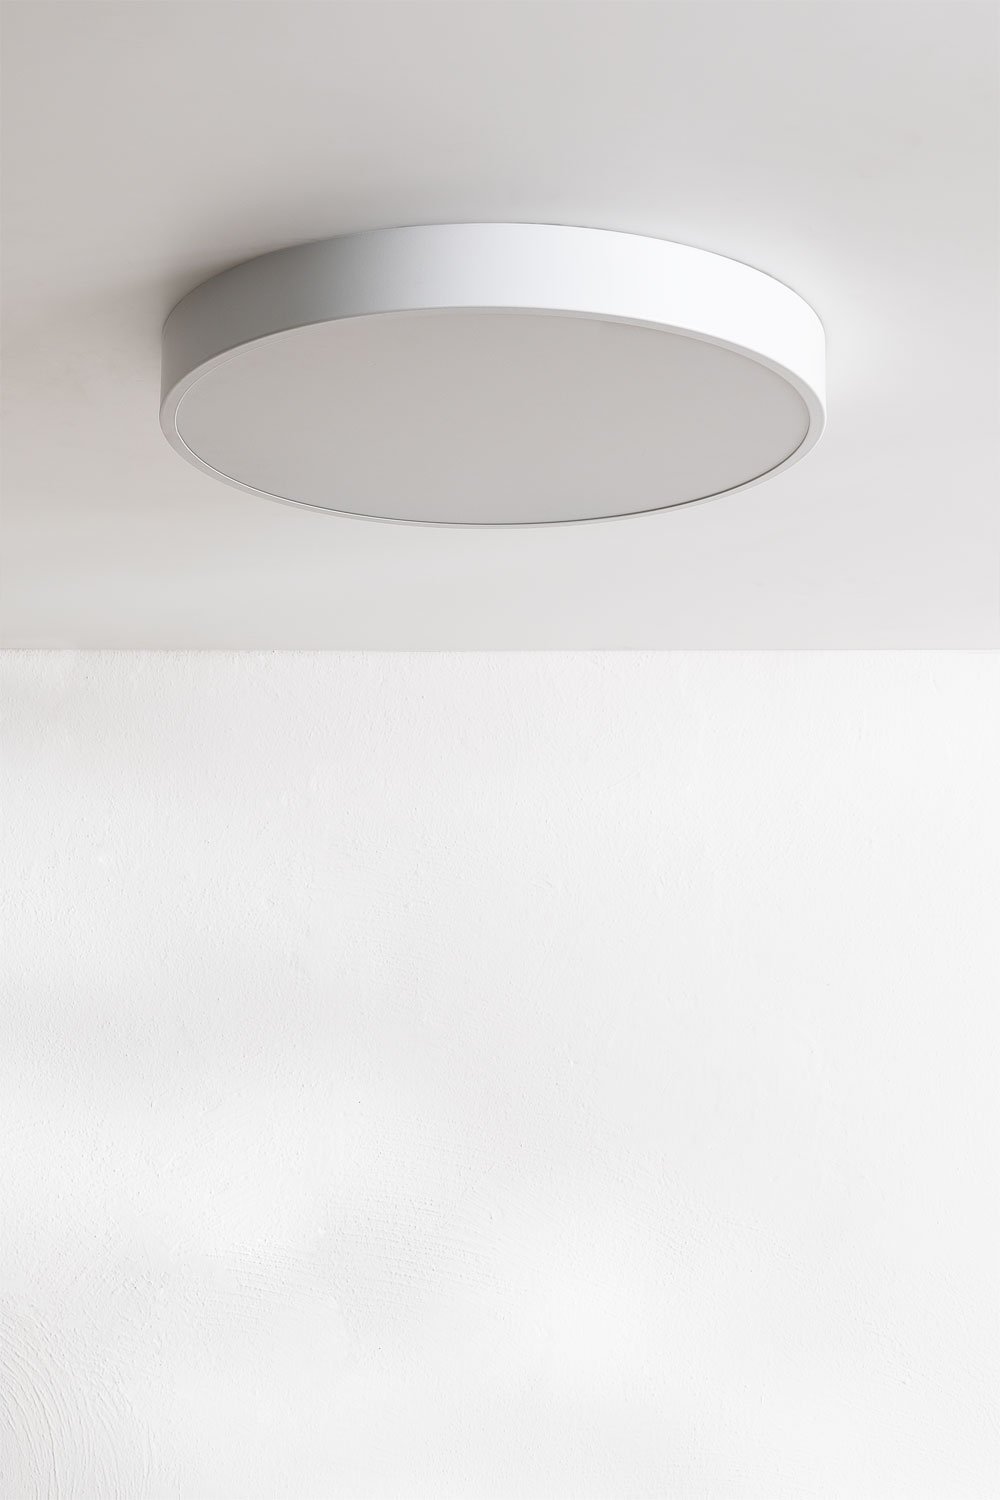 LED plafondlamp (Ø40 cm) Cosmin, galerij beeld 1